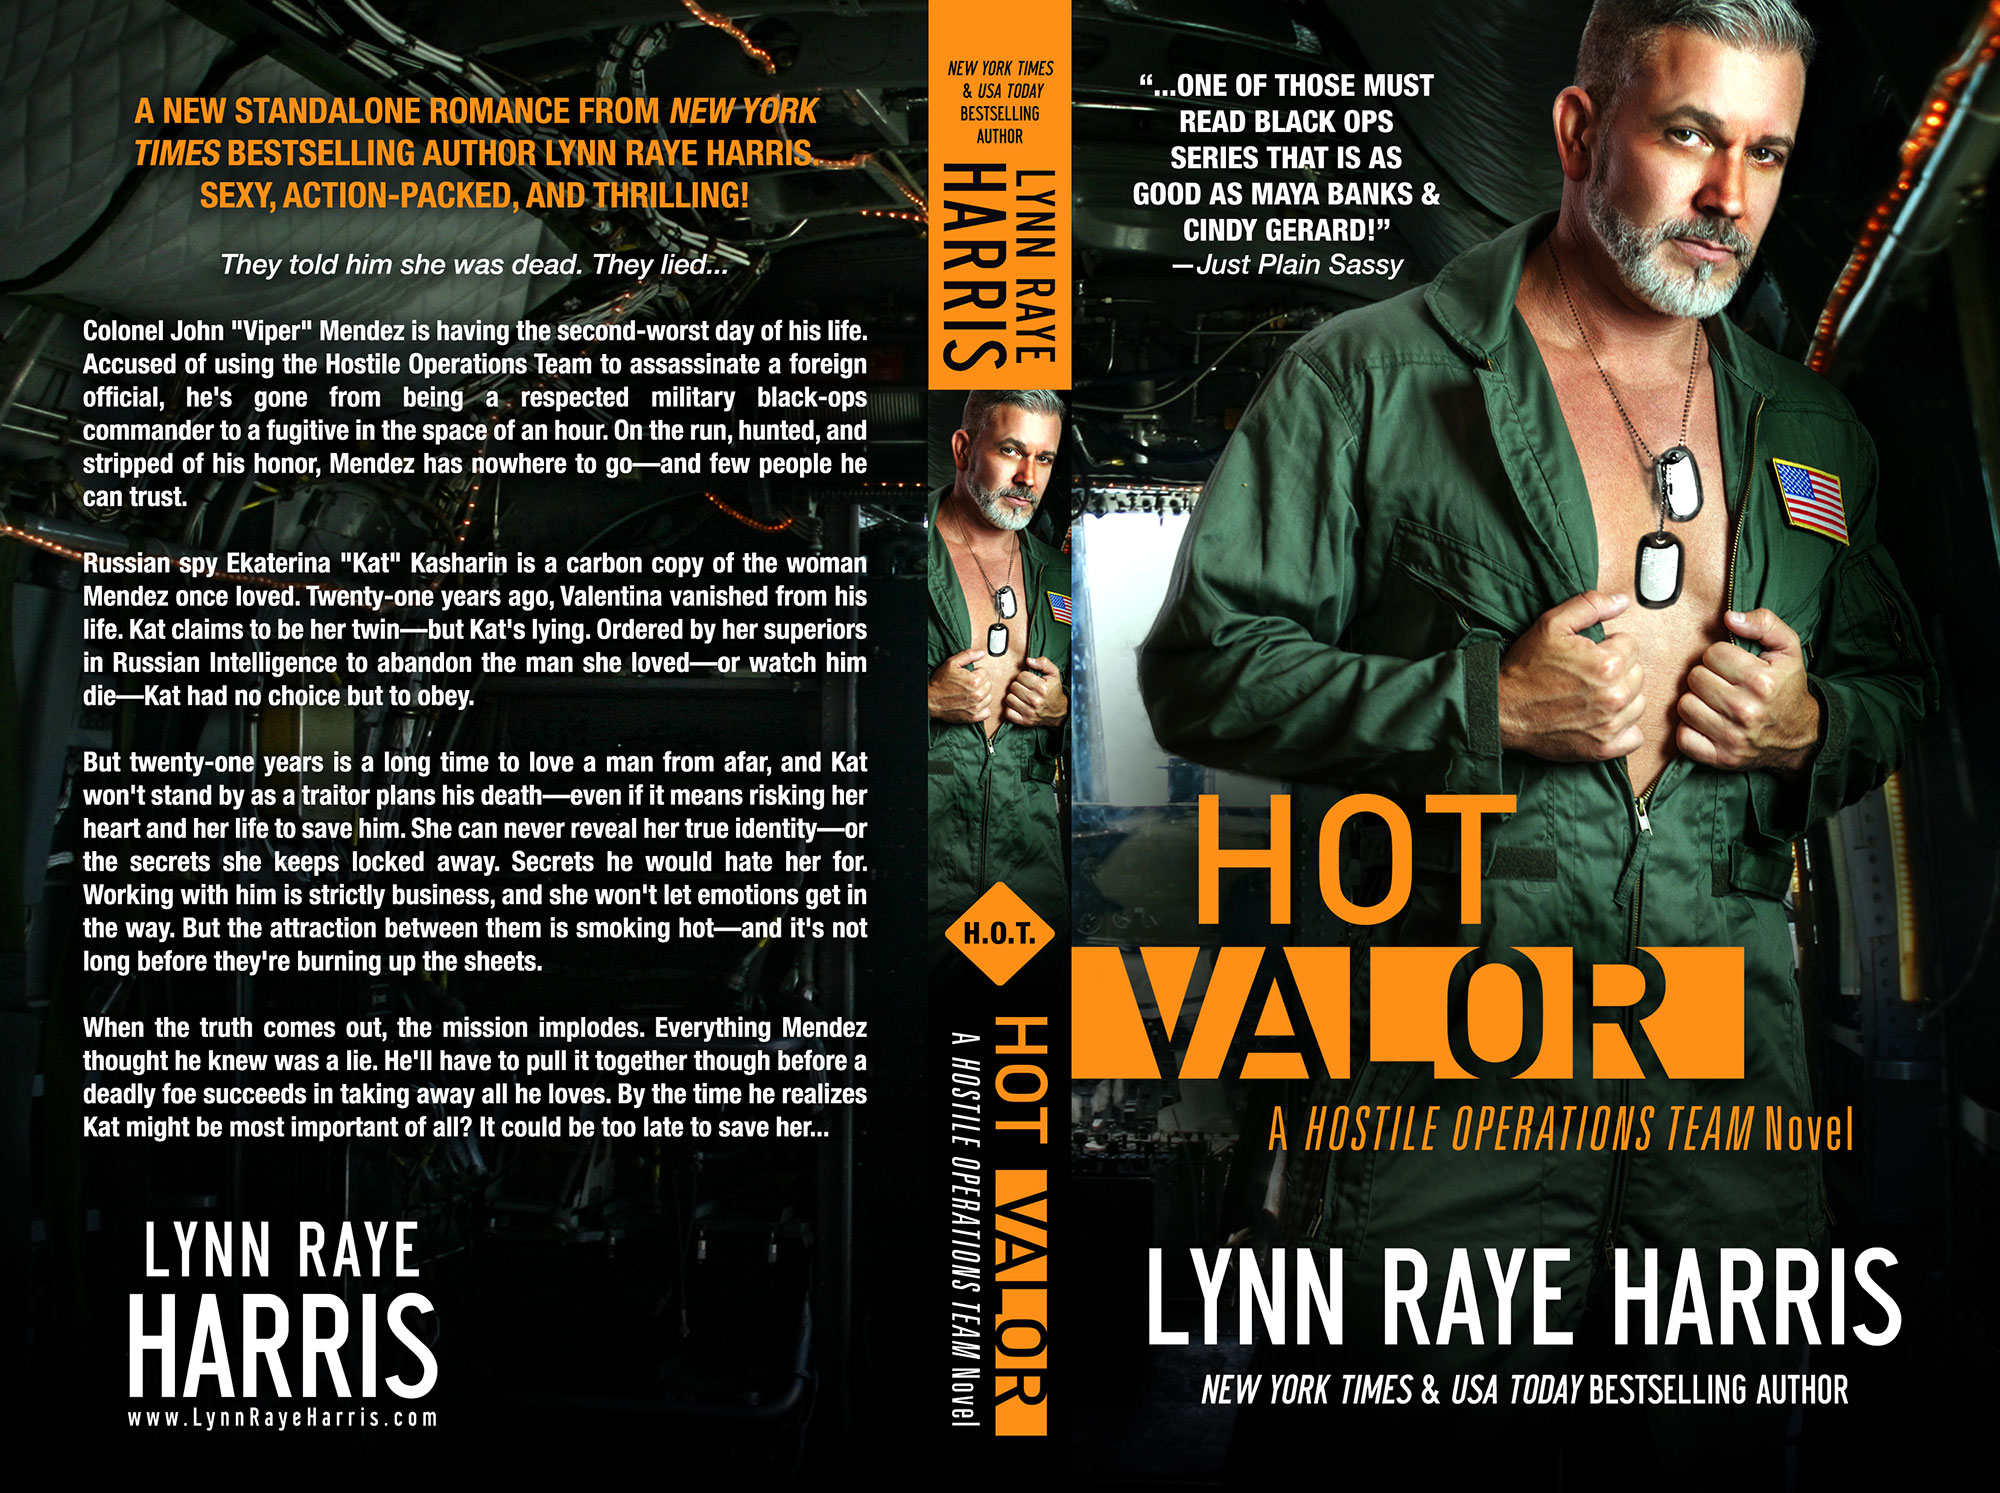 HOT VALOR by Lynn Raye Harris (Print Coverflat)